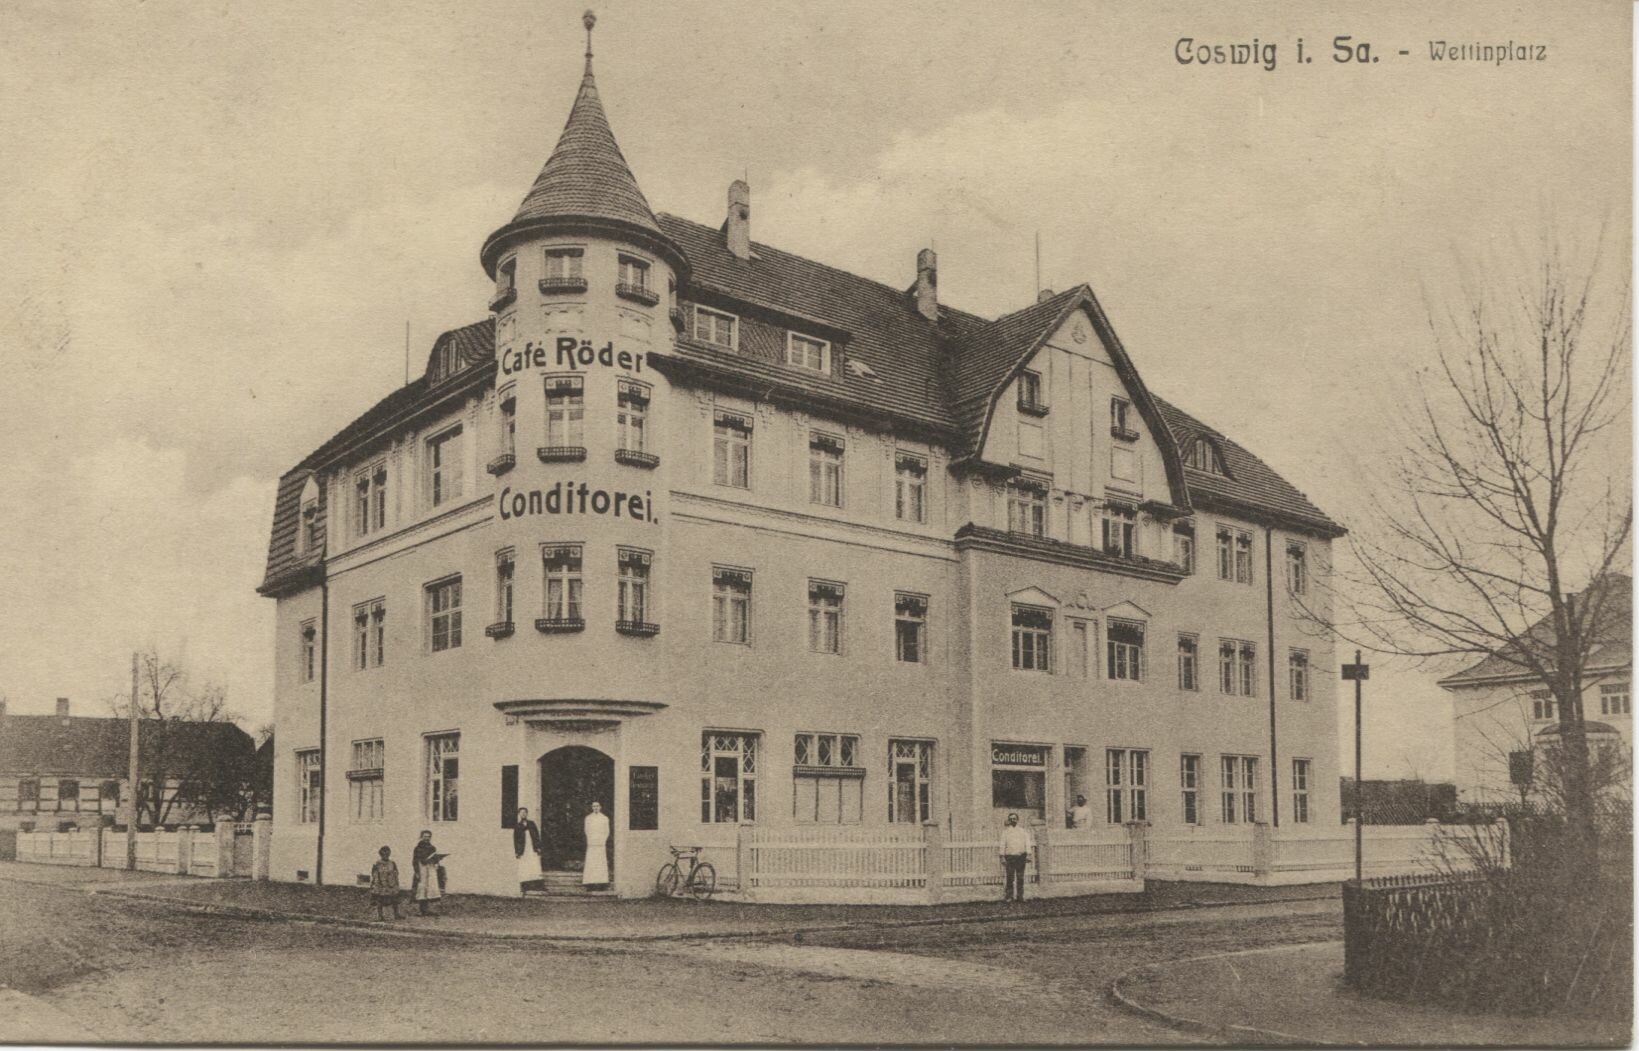 Postkarte: Coswig - Gaststätten - Cafe Röder (Cafe Saupe, Stadtcafe) (Karrasburg Museum Coswig CC BY-NC-SA)